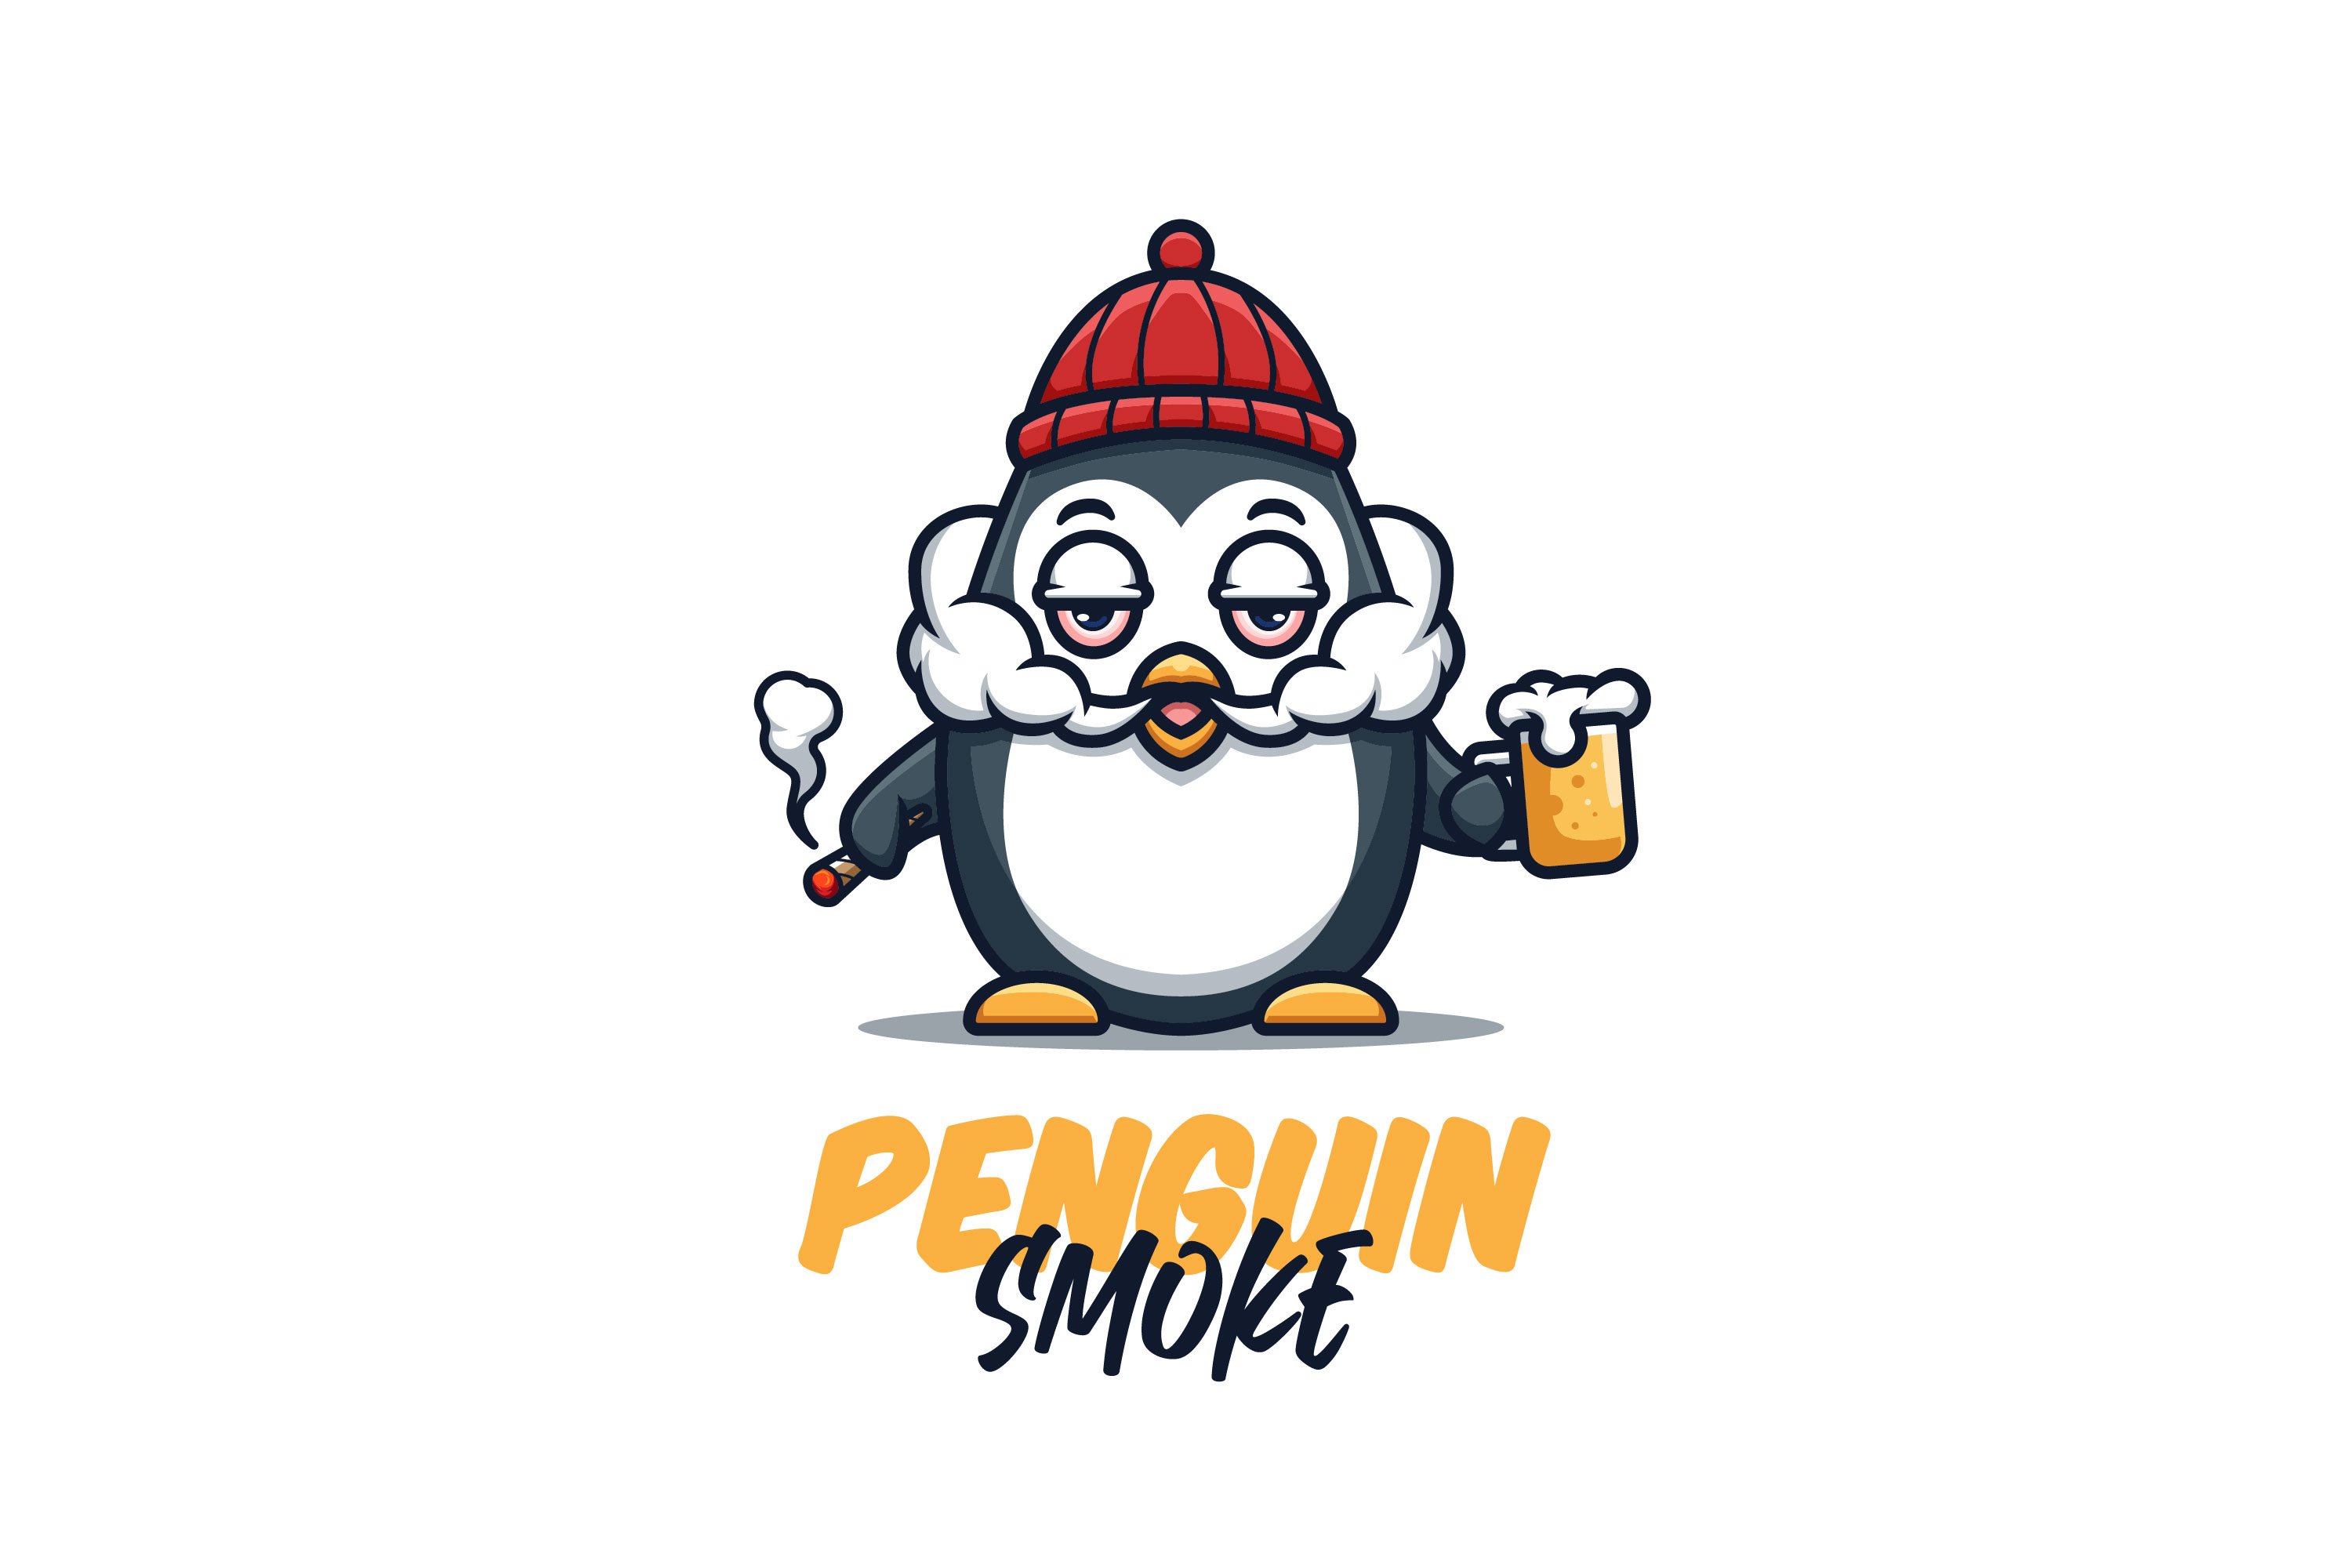 Penguin Smoke Logo cover image.